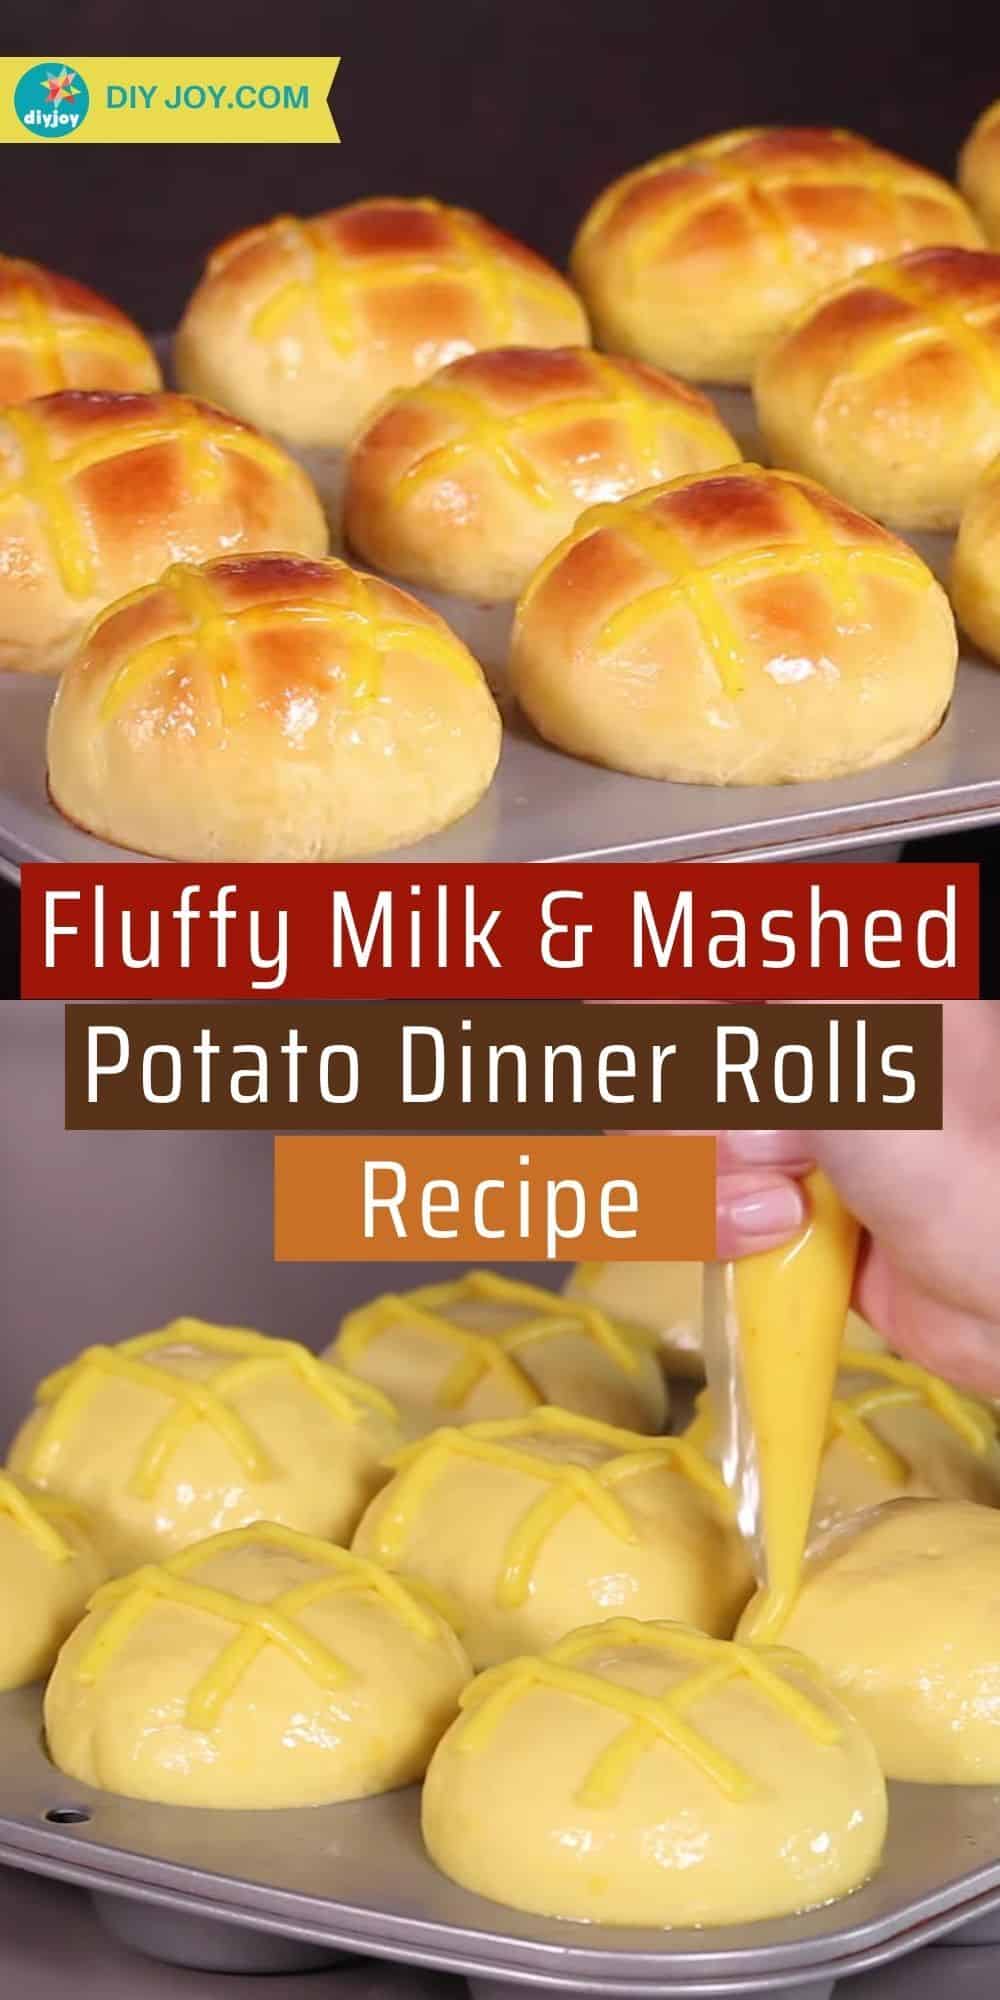 Fluffy Milk & Mashed Potato Dinner Rolls Recipe